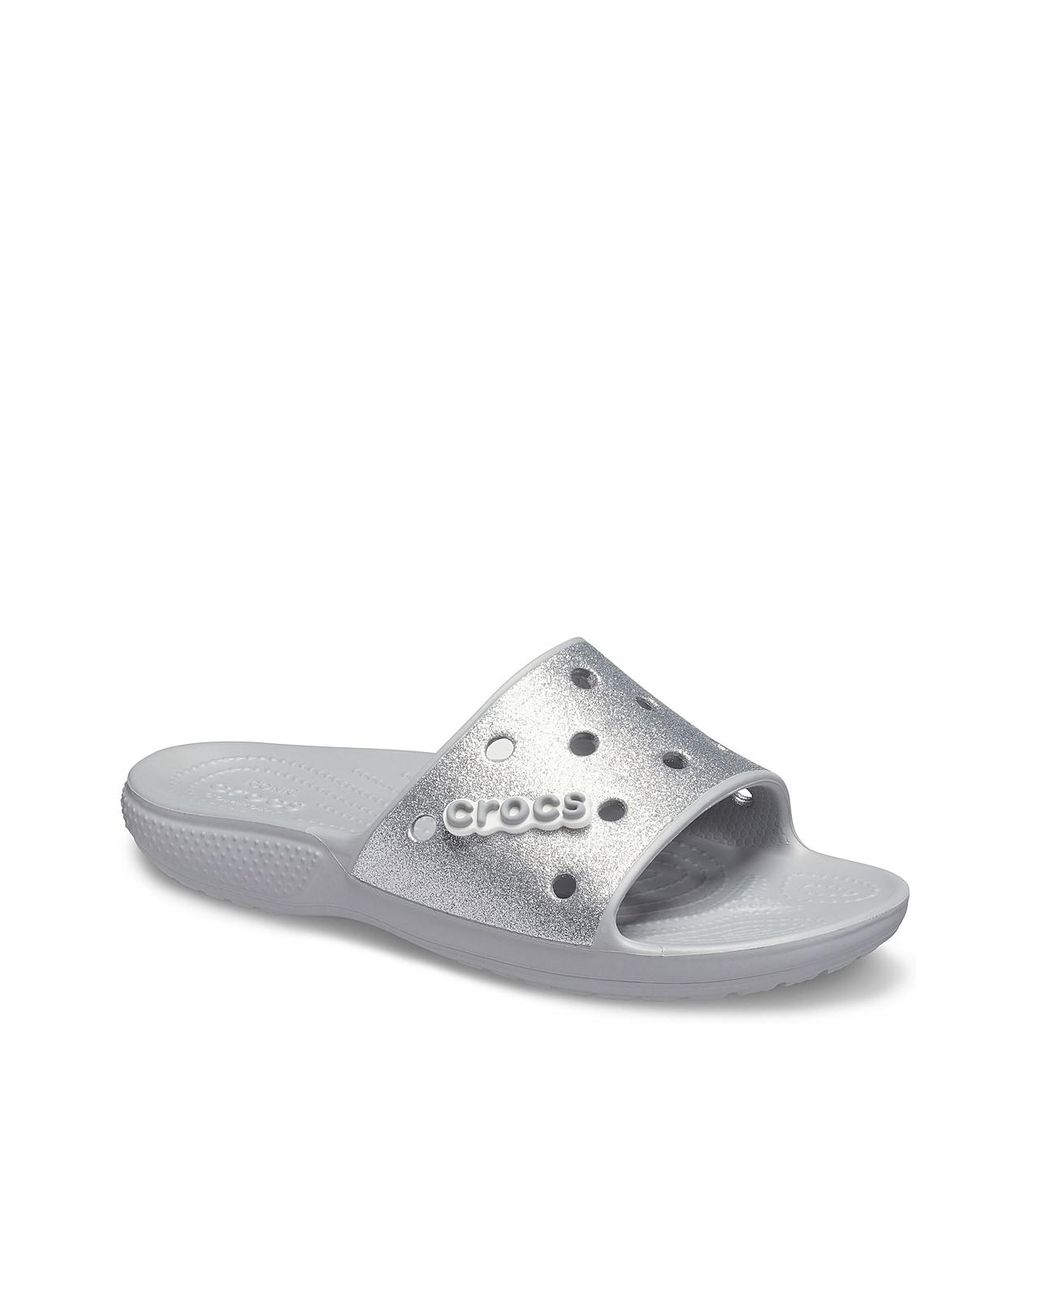 Crocs™ Synthetic Classic Slide Sandal in Silver Metallic (Metallic) - Lyst